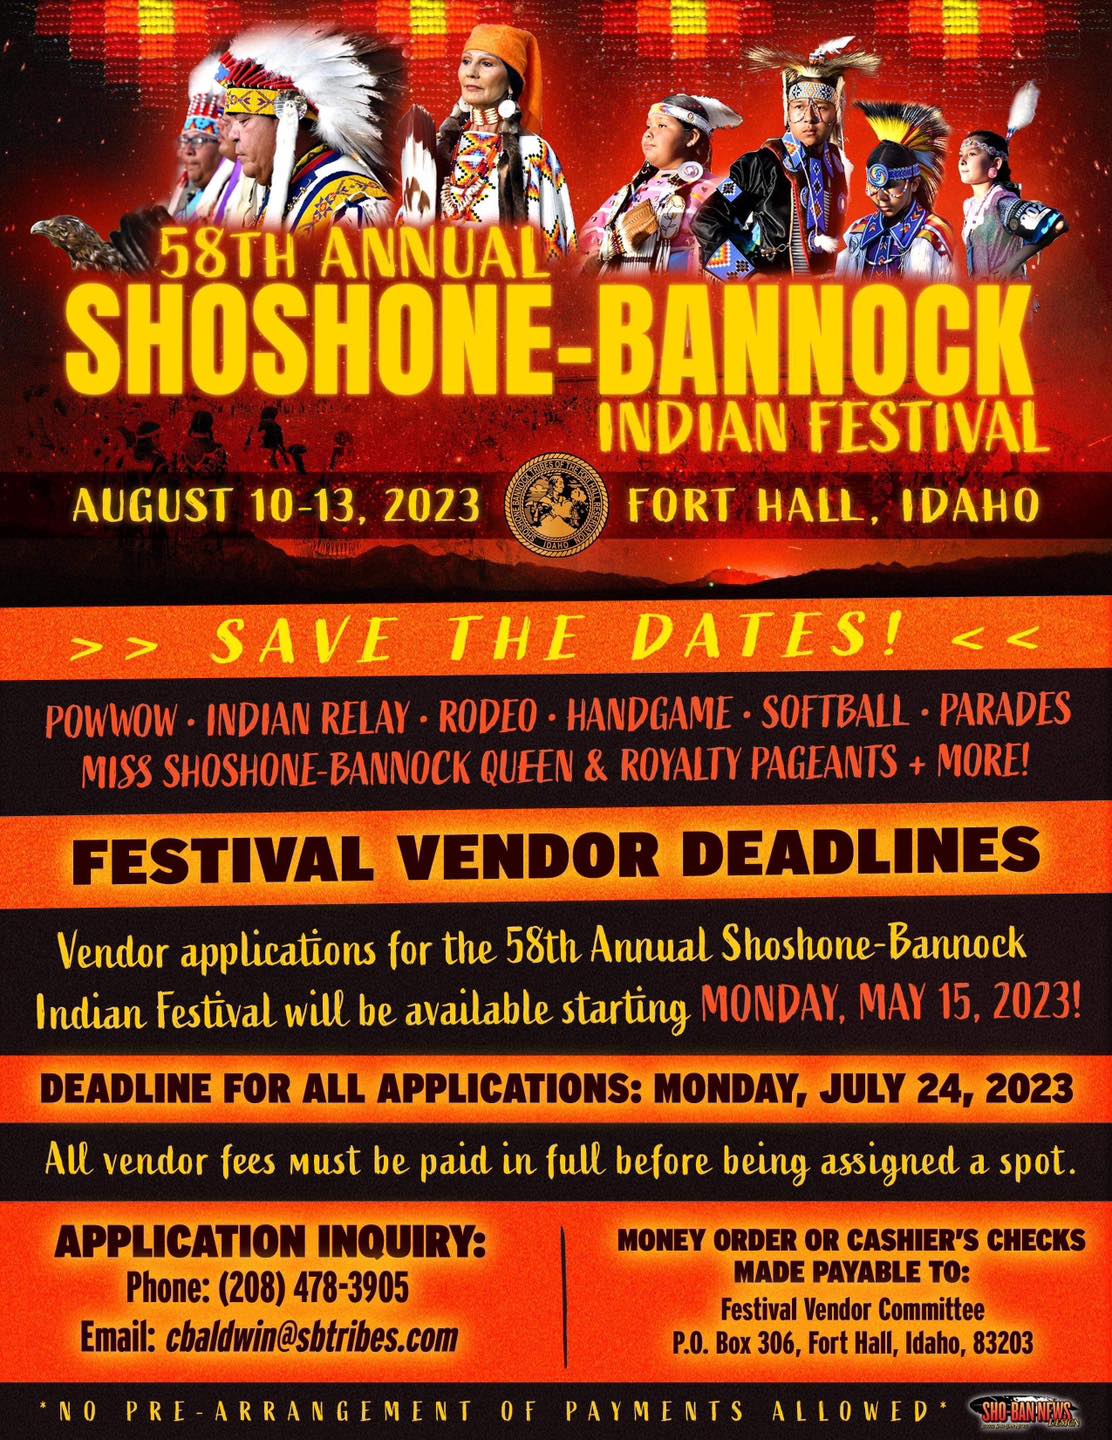 Shoshone-Bannock Indian Festival 2023